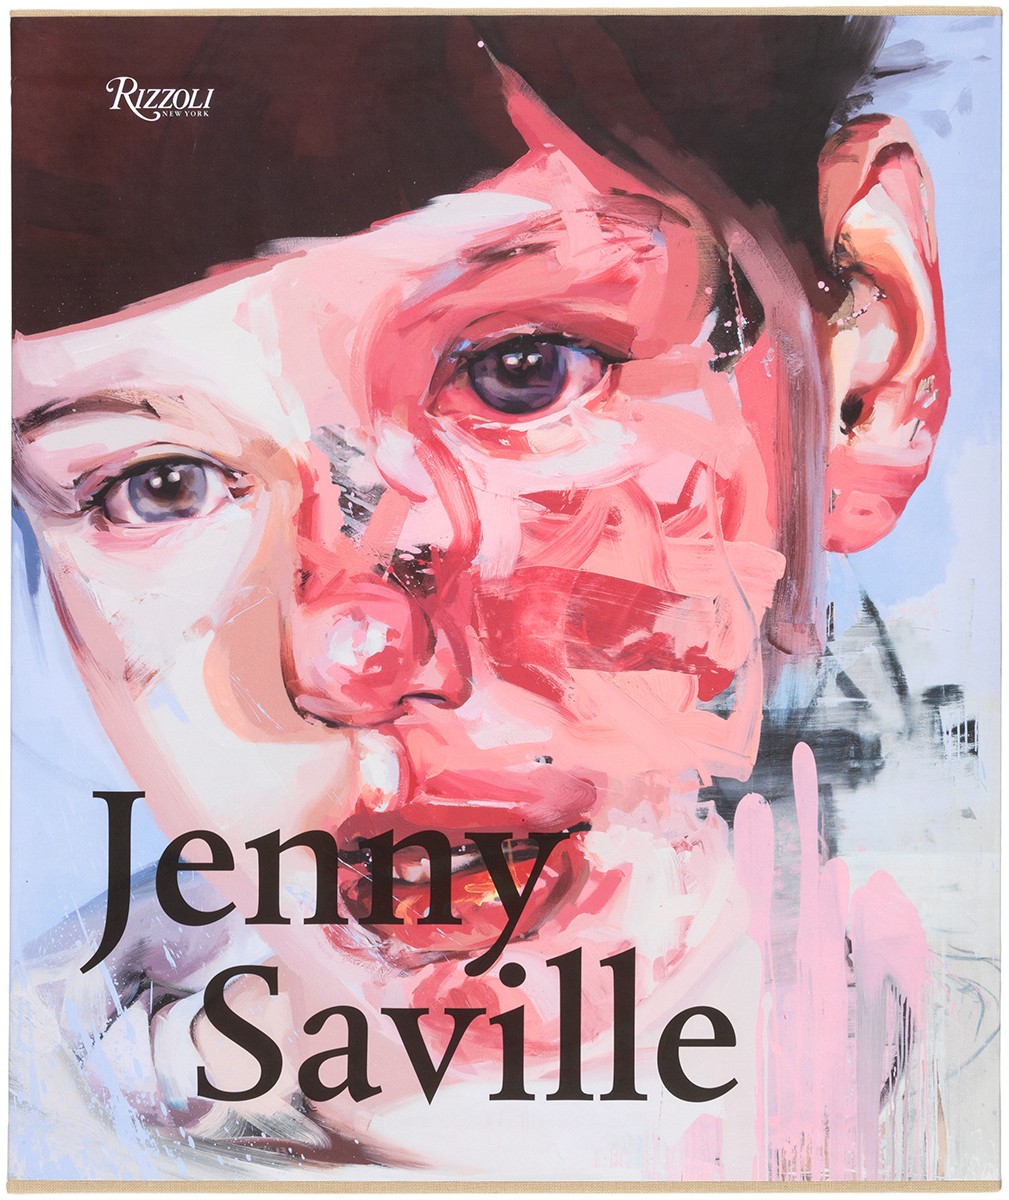 Jenny Saville | Events | News | Gagosian